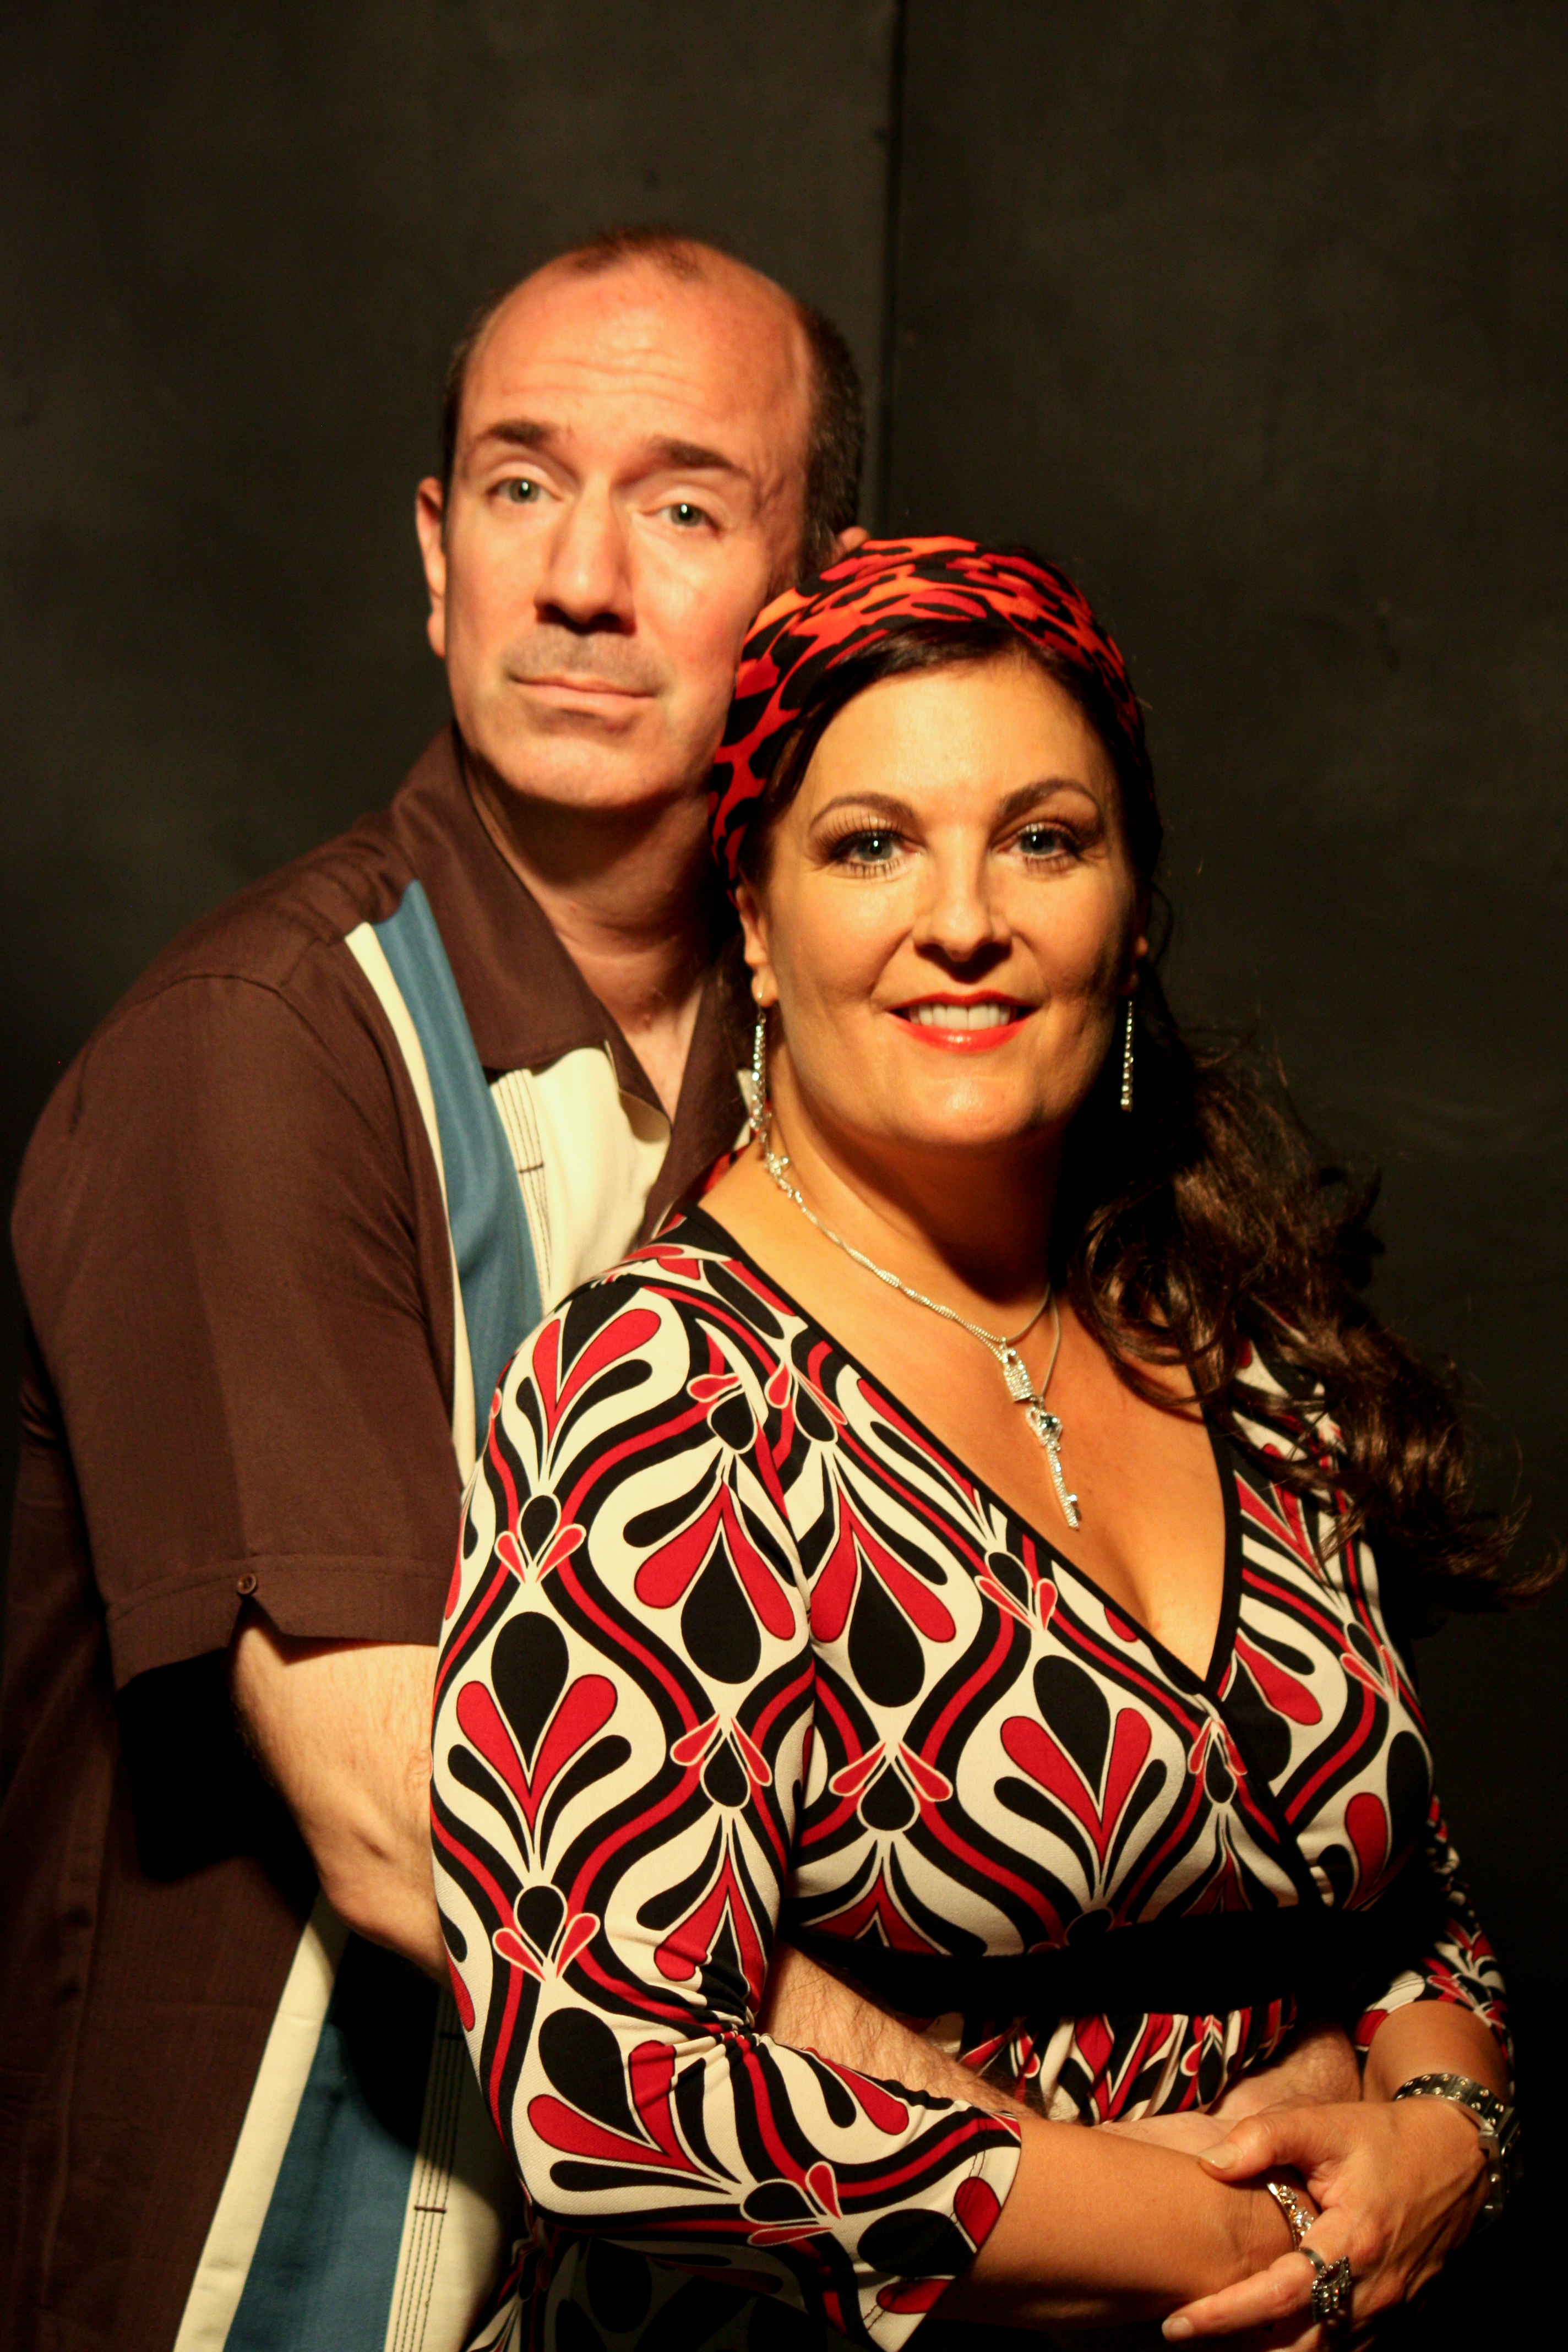 Reggie (Richard Van Slyke) and Doris (April Audia) The Playhouse Season Two